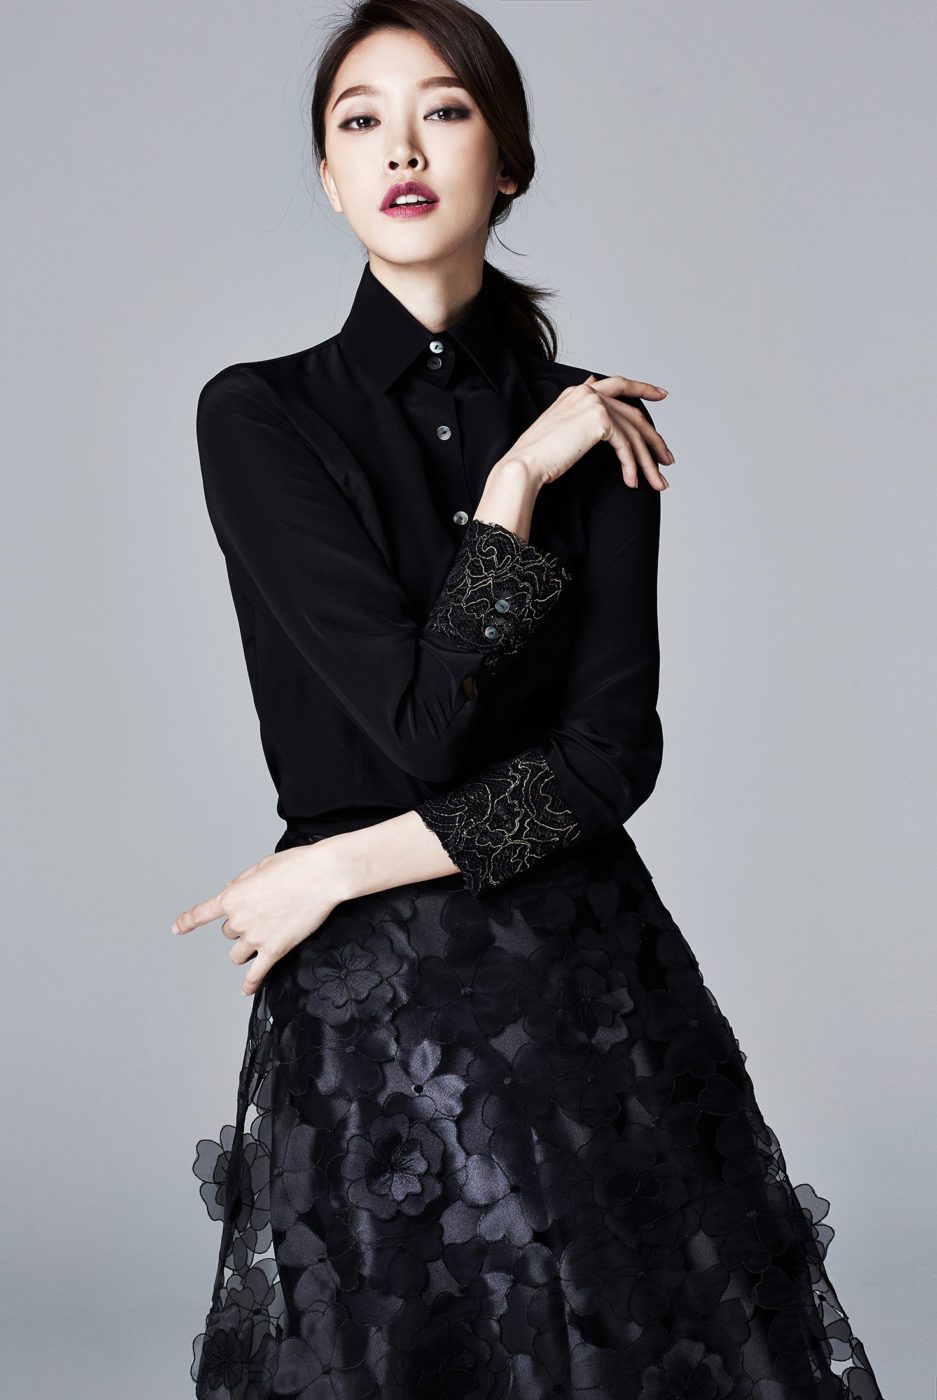 yura seo korean singapore basic models female fashion celebrity host emcee